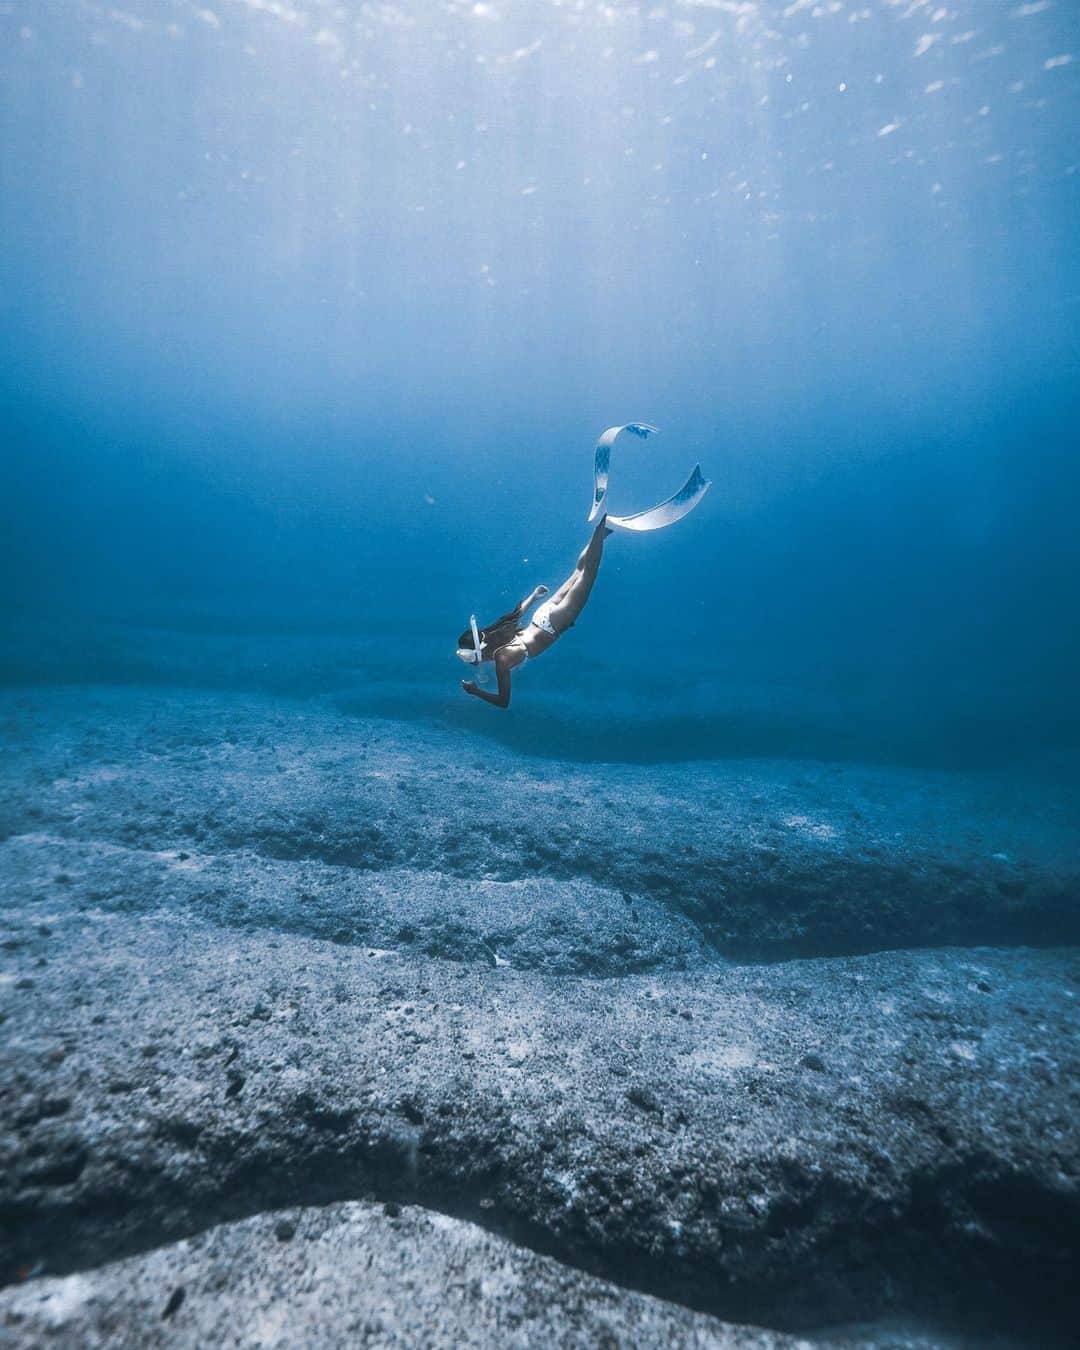 H I R O M I M O R I Y Aのインスタグラム：「Underwater trip🌊  ぴーちゃんいつもありがとう📸🐬  @smile_pii   そろそろニューレンズのお披露目かな？？😆  Camera:sony a7iii Lens:16-35 zeiss  #underwaterphotography #paditv #underwater #ocean #underwaterlife #scubadiving #earthshotz #planetearth  #freediving #freedivephotography #sonyalpha #alpha_newgeneration_bysony  #ダイビング　#ダイビング好きな人と繋がりたい #宮古島ダイビング　#宮古島　#スキンダイビング  #水中写真　#自由潛水　#海好きな人と繋がりたい　#八重干瀬　#alpha_newgeneration_bysony」